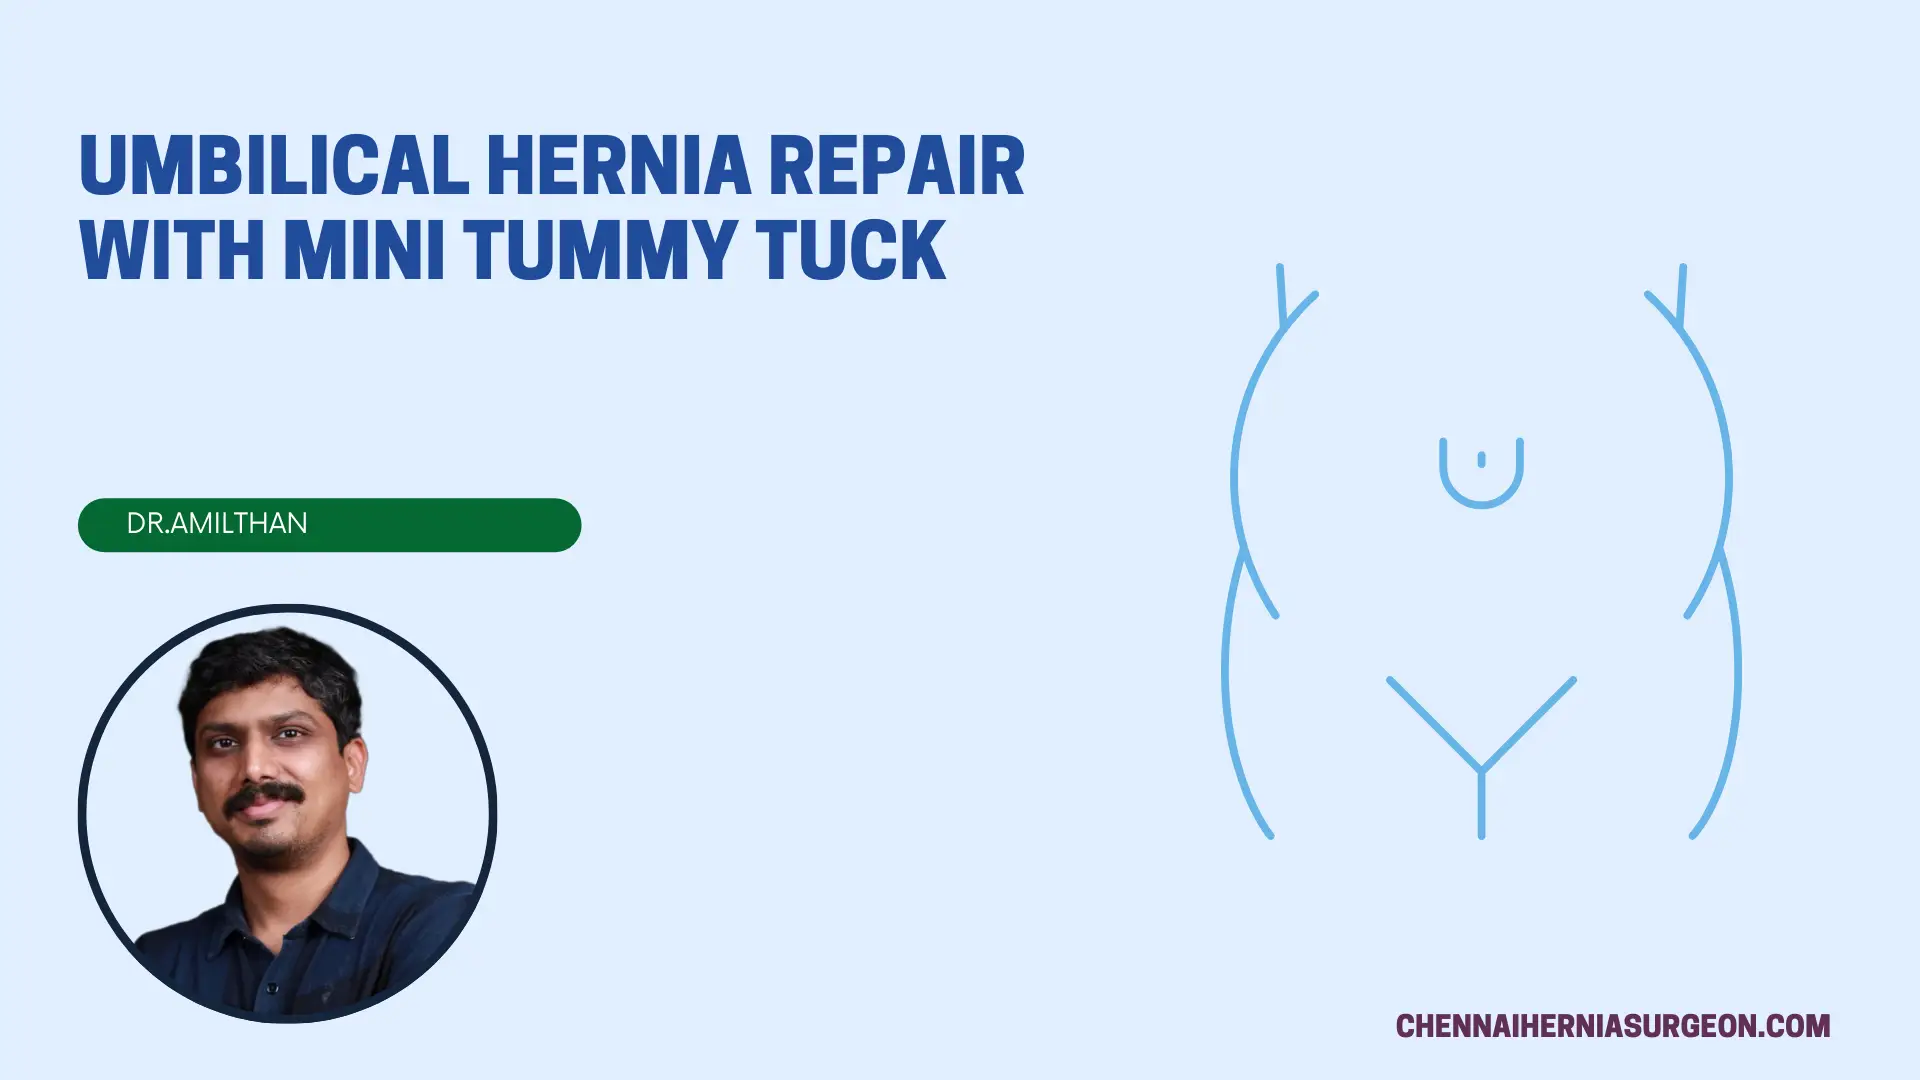 UMBILICAL HERNIA REPAIR WITH MINI TUMMY TUCK